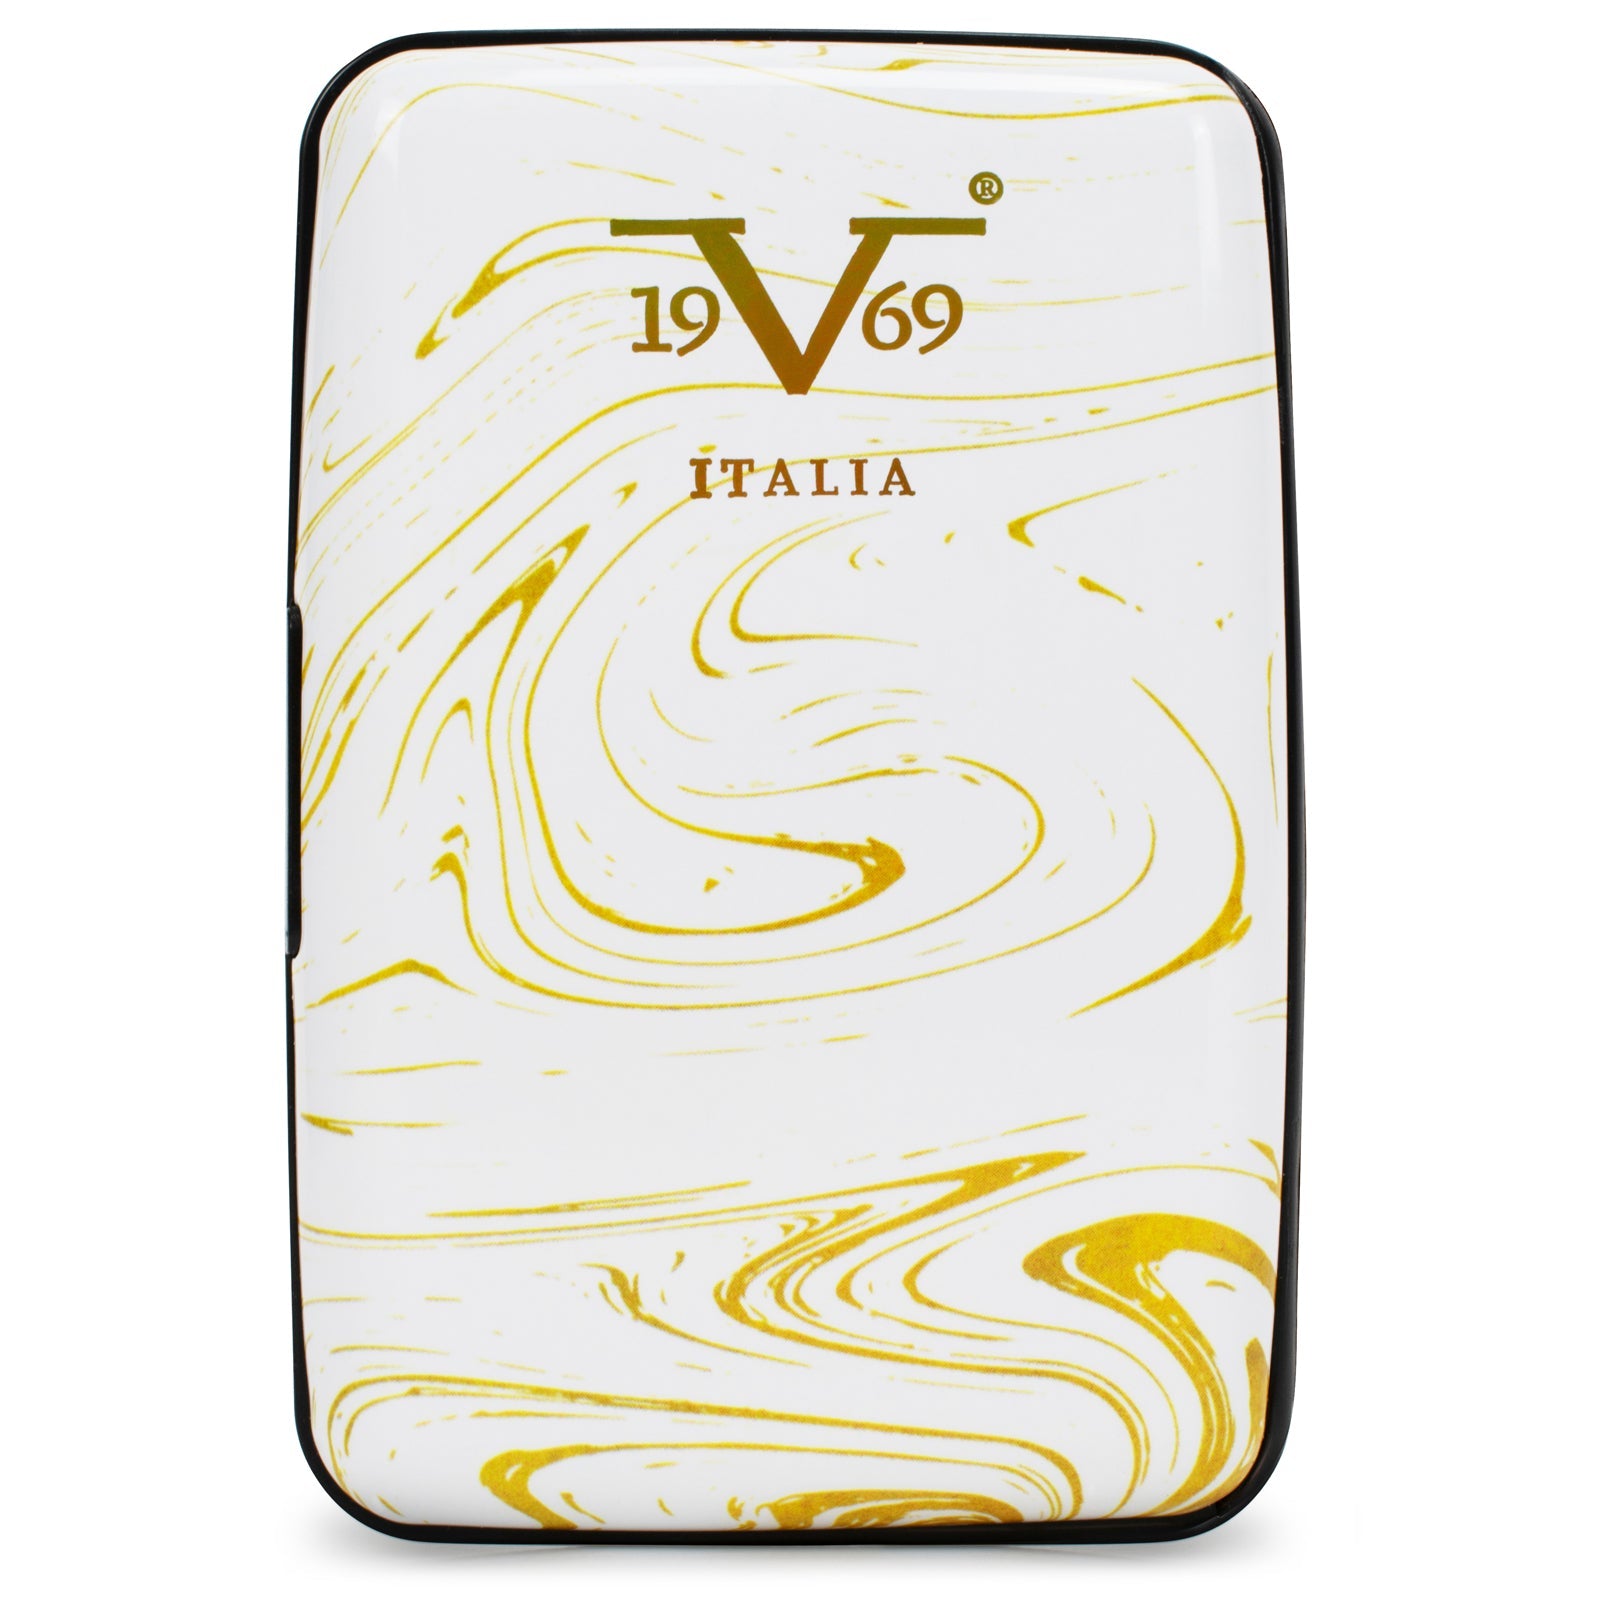 Lava RFID Wallet and Credit Card Case - White Lava 19V69 Italia